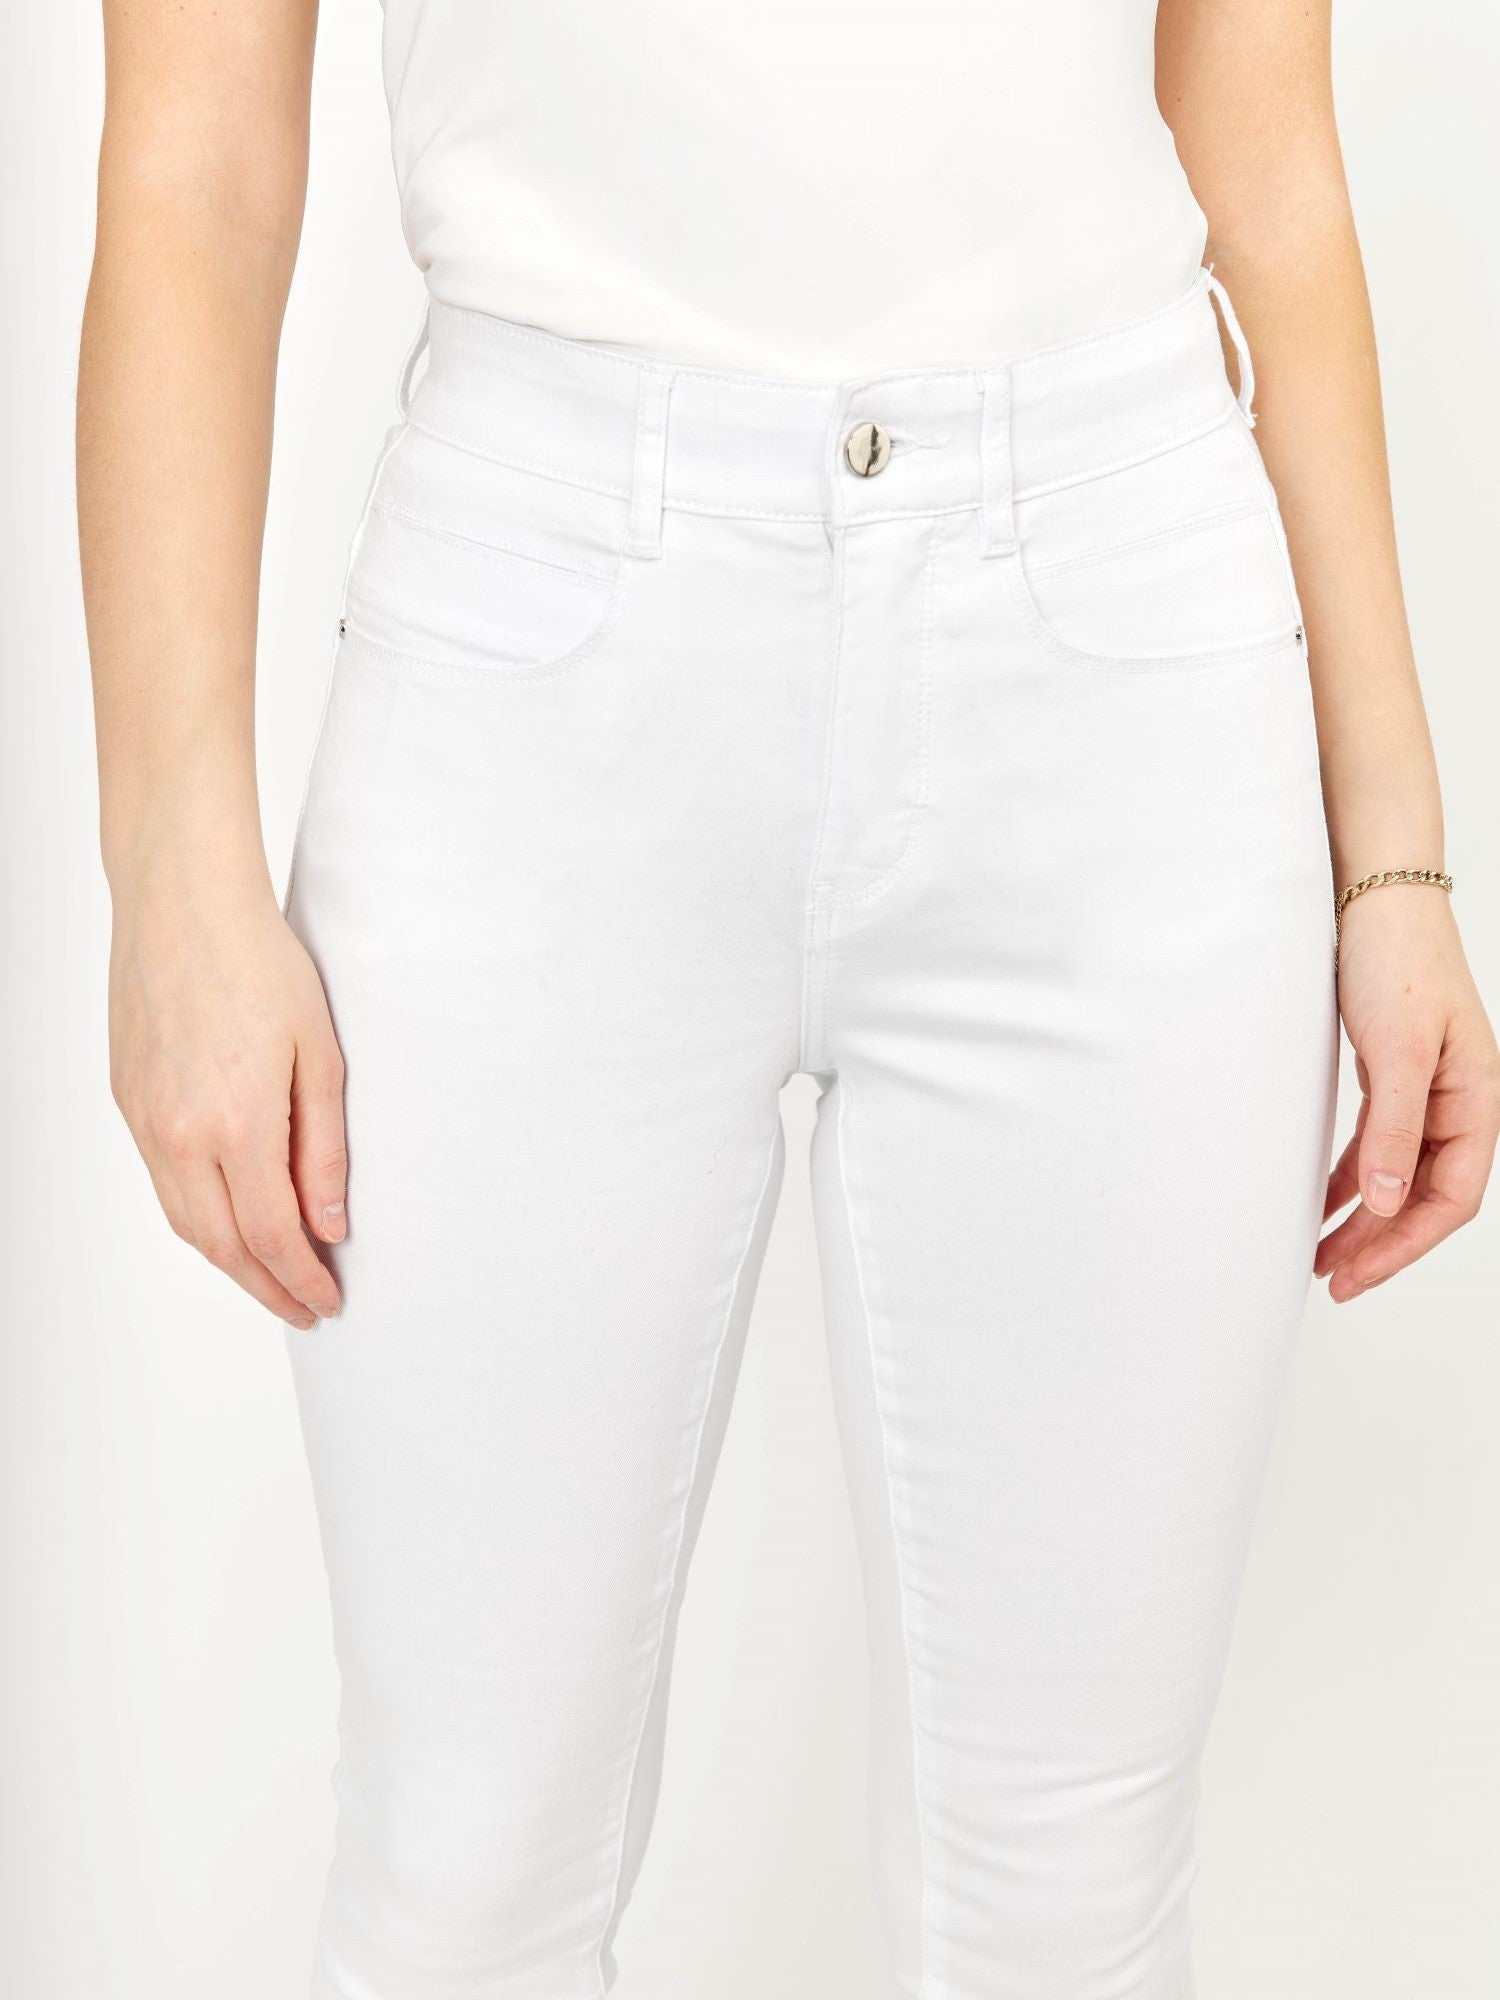 Frank Lyman White Denim Jeans Style 213126U